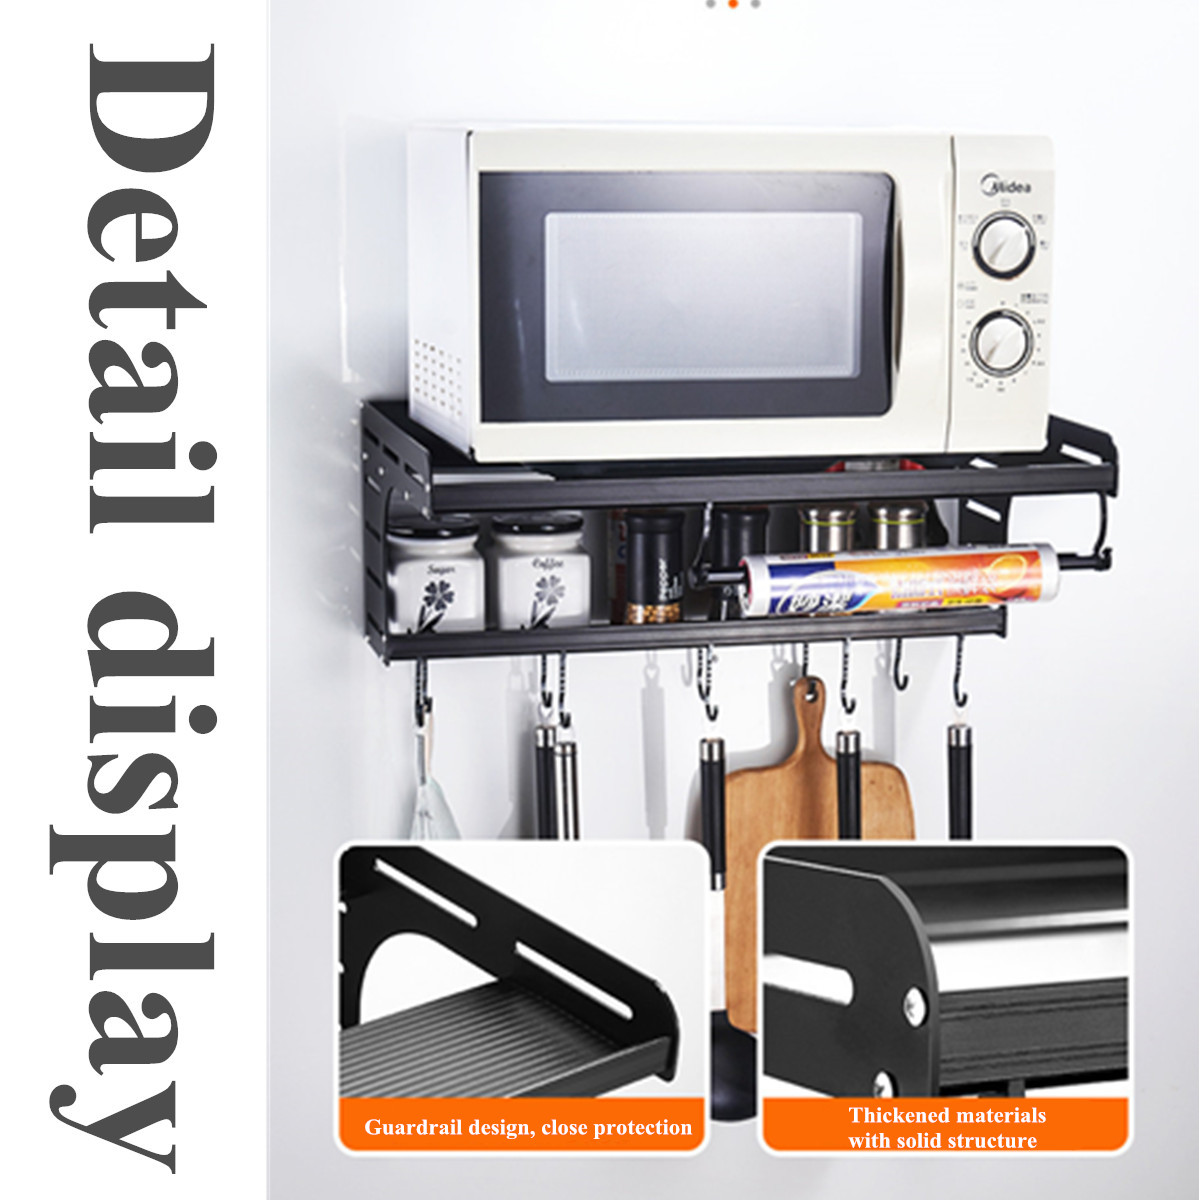 Aluminum-Microwave-Oven-Wall-Mount-Microwave-Kitchen-Desktop-Organizer-Racks-2-Layer-Oven-Stand-Kitc-1602461-2